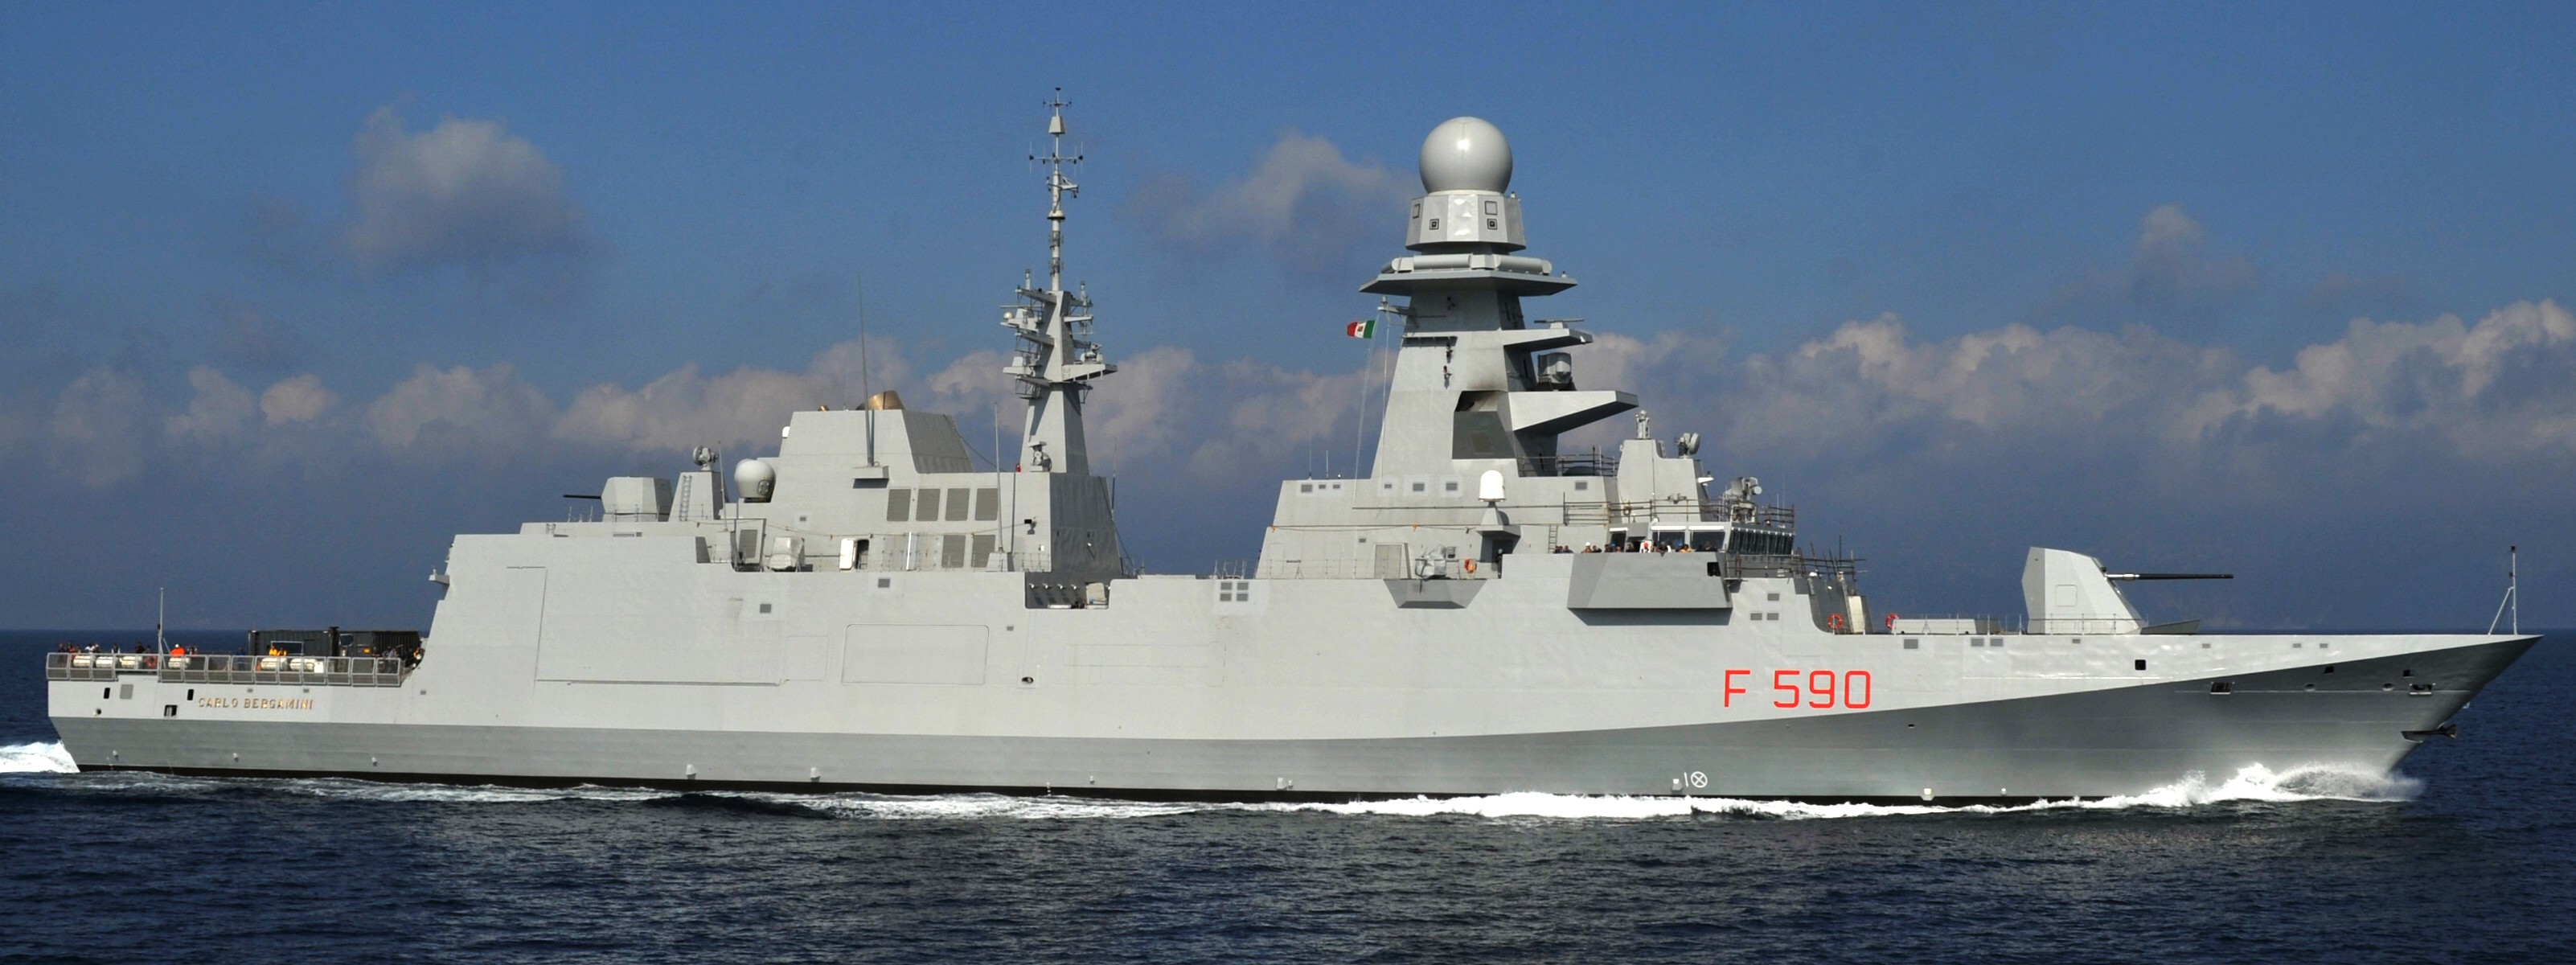 f-590 its carlo bergamini nave fremm class guided missile frigate italian navy marina militare 04